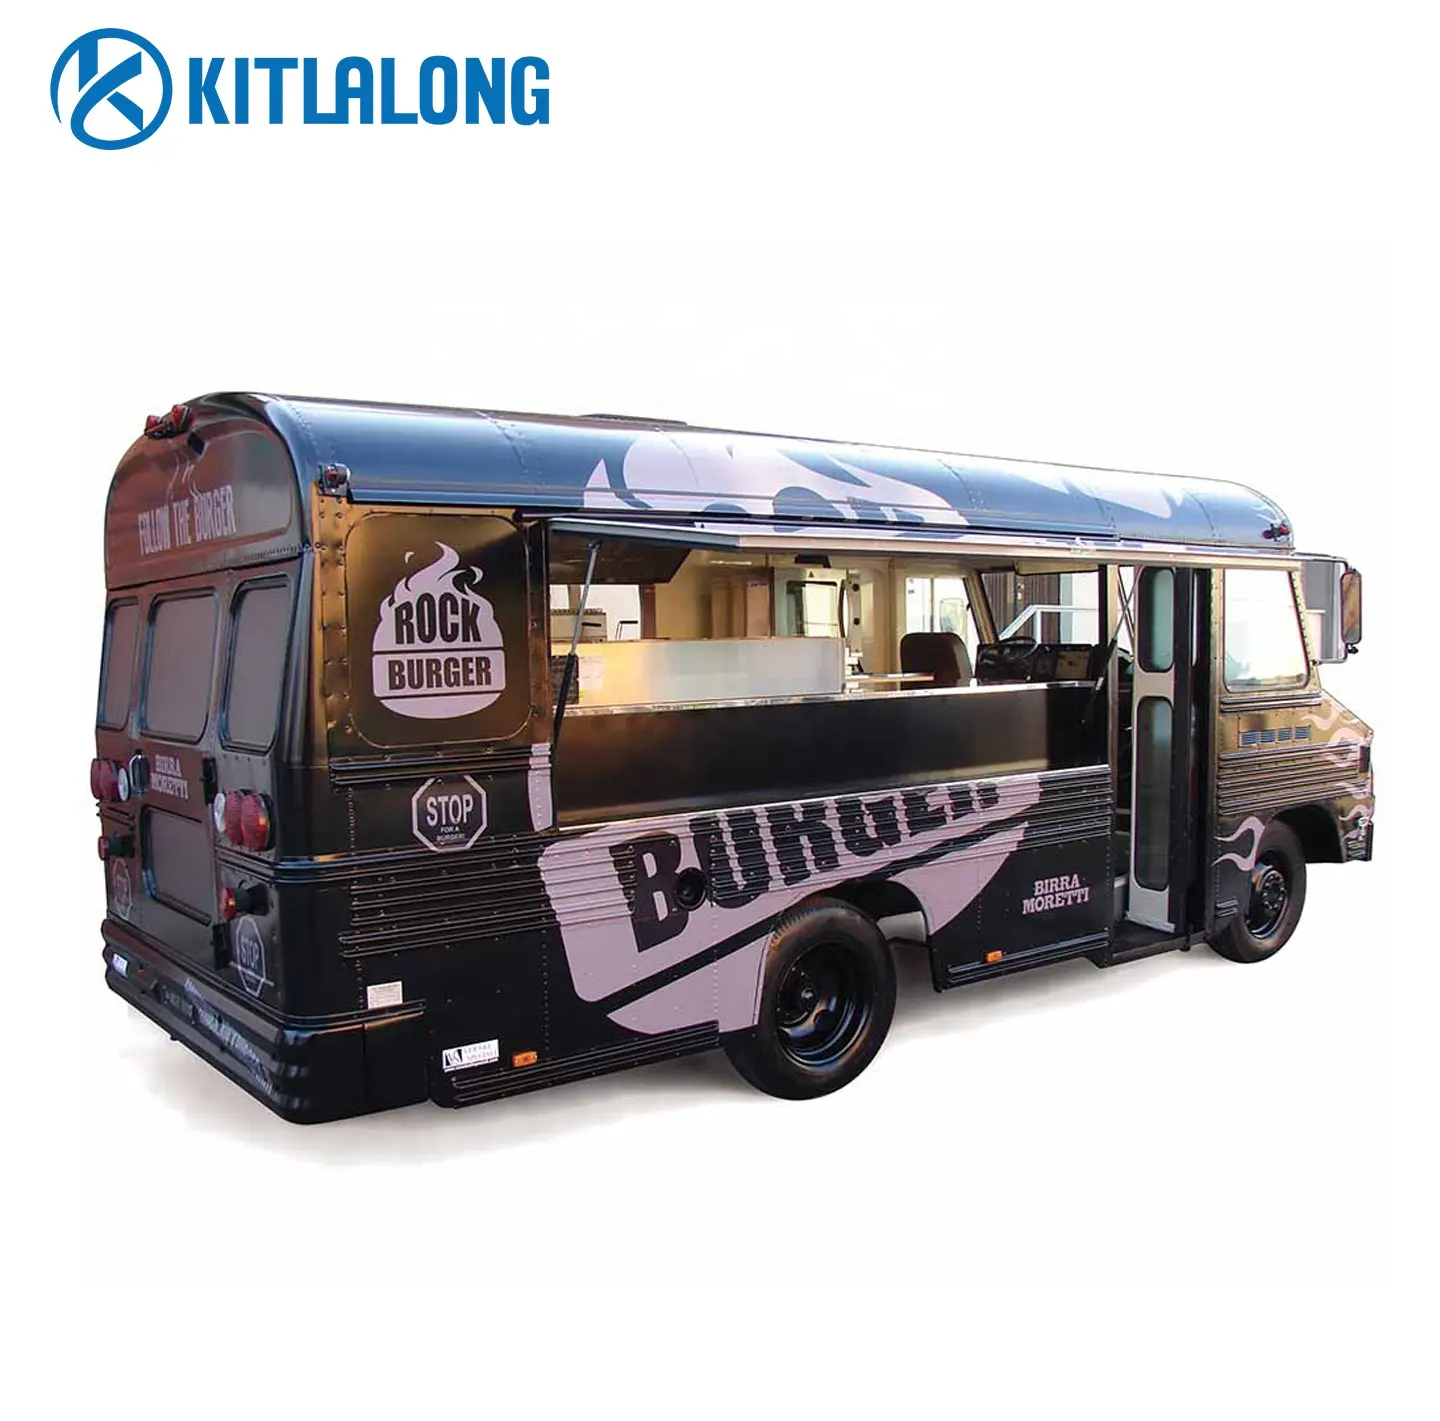 Kitlinong Hot Fast burger pizza shop snack kebab cucina personalizzata mobile coffee trucks food van truck con Food Truck